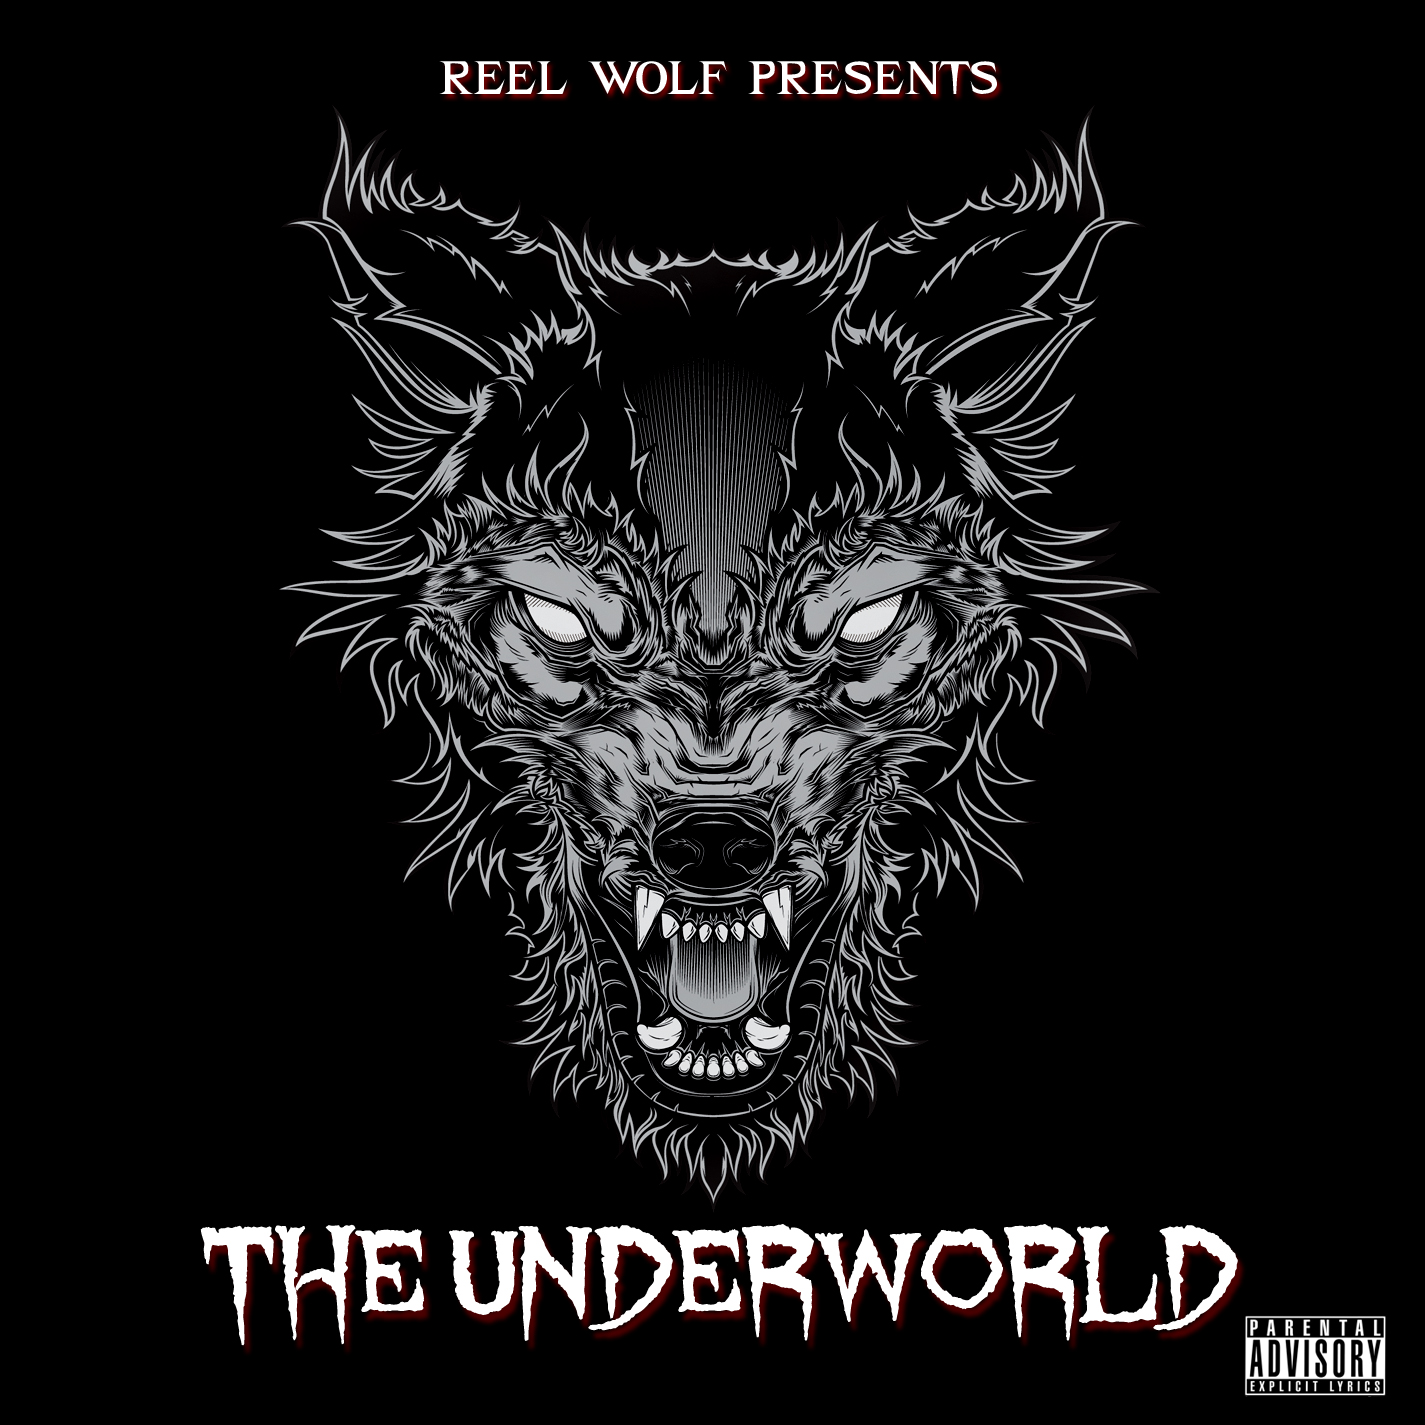 "The Underworld" Album Cover